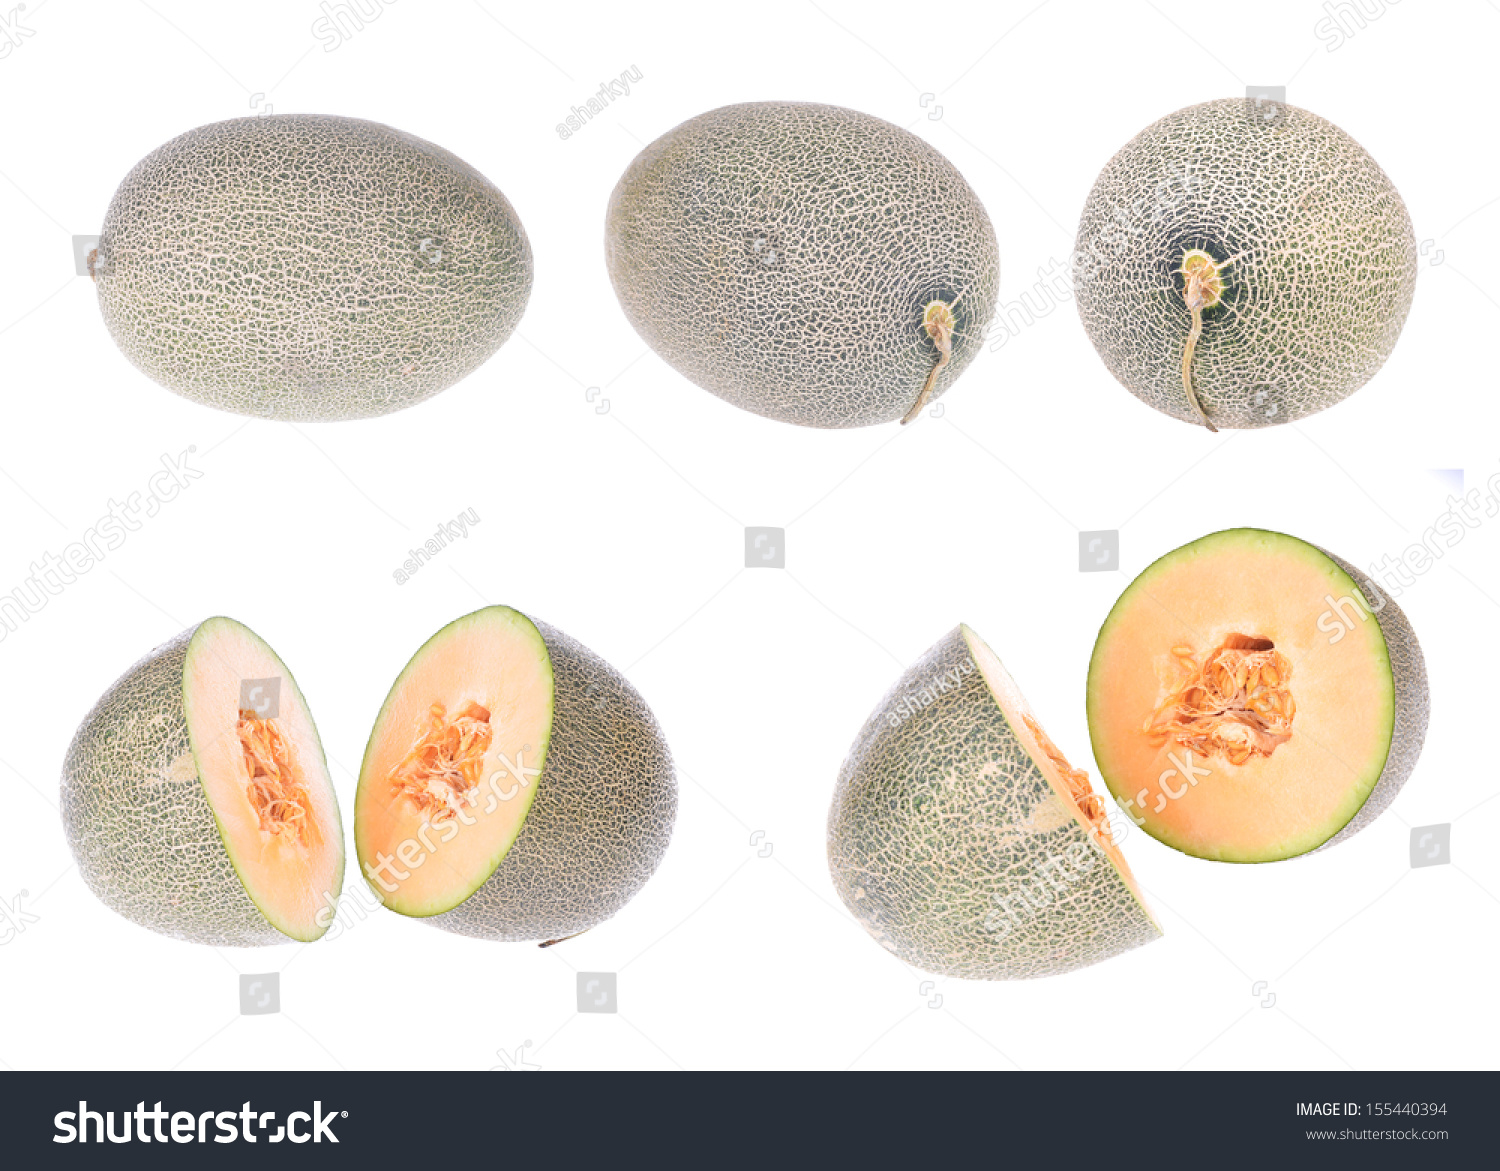 Hami melon on white background #155440394